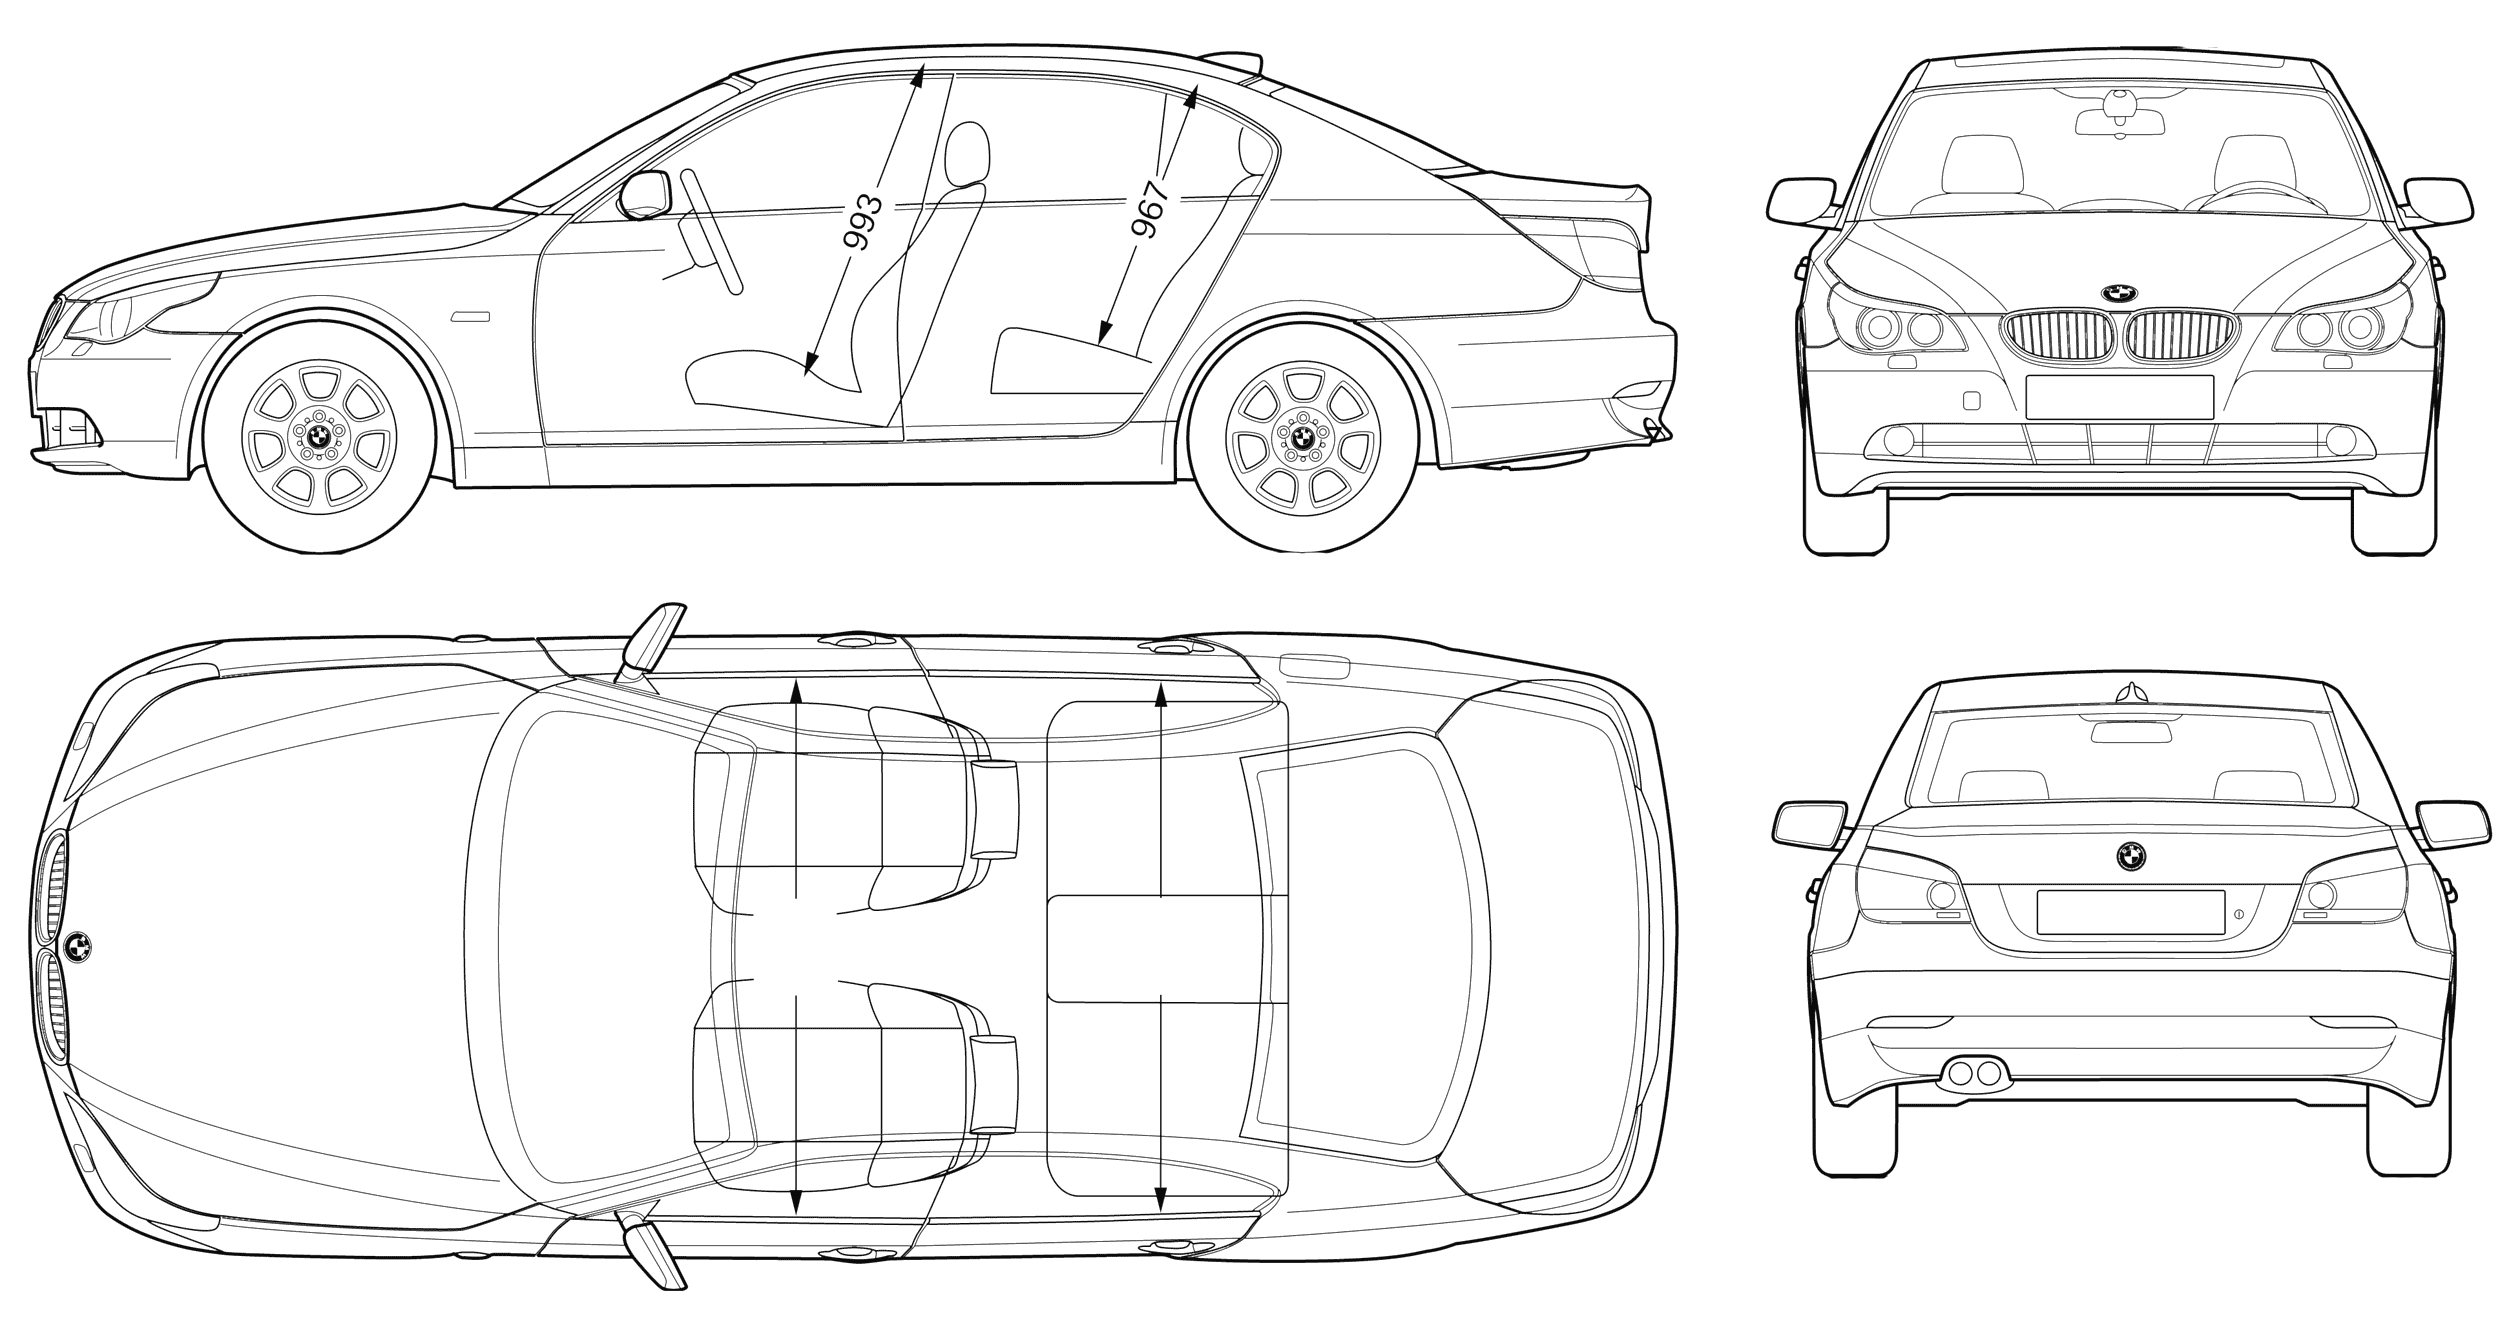 BMW M3 (1988) Blueprints Vector Drawing Bmw blueprints e60 series sedan
2003